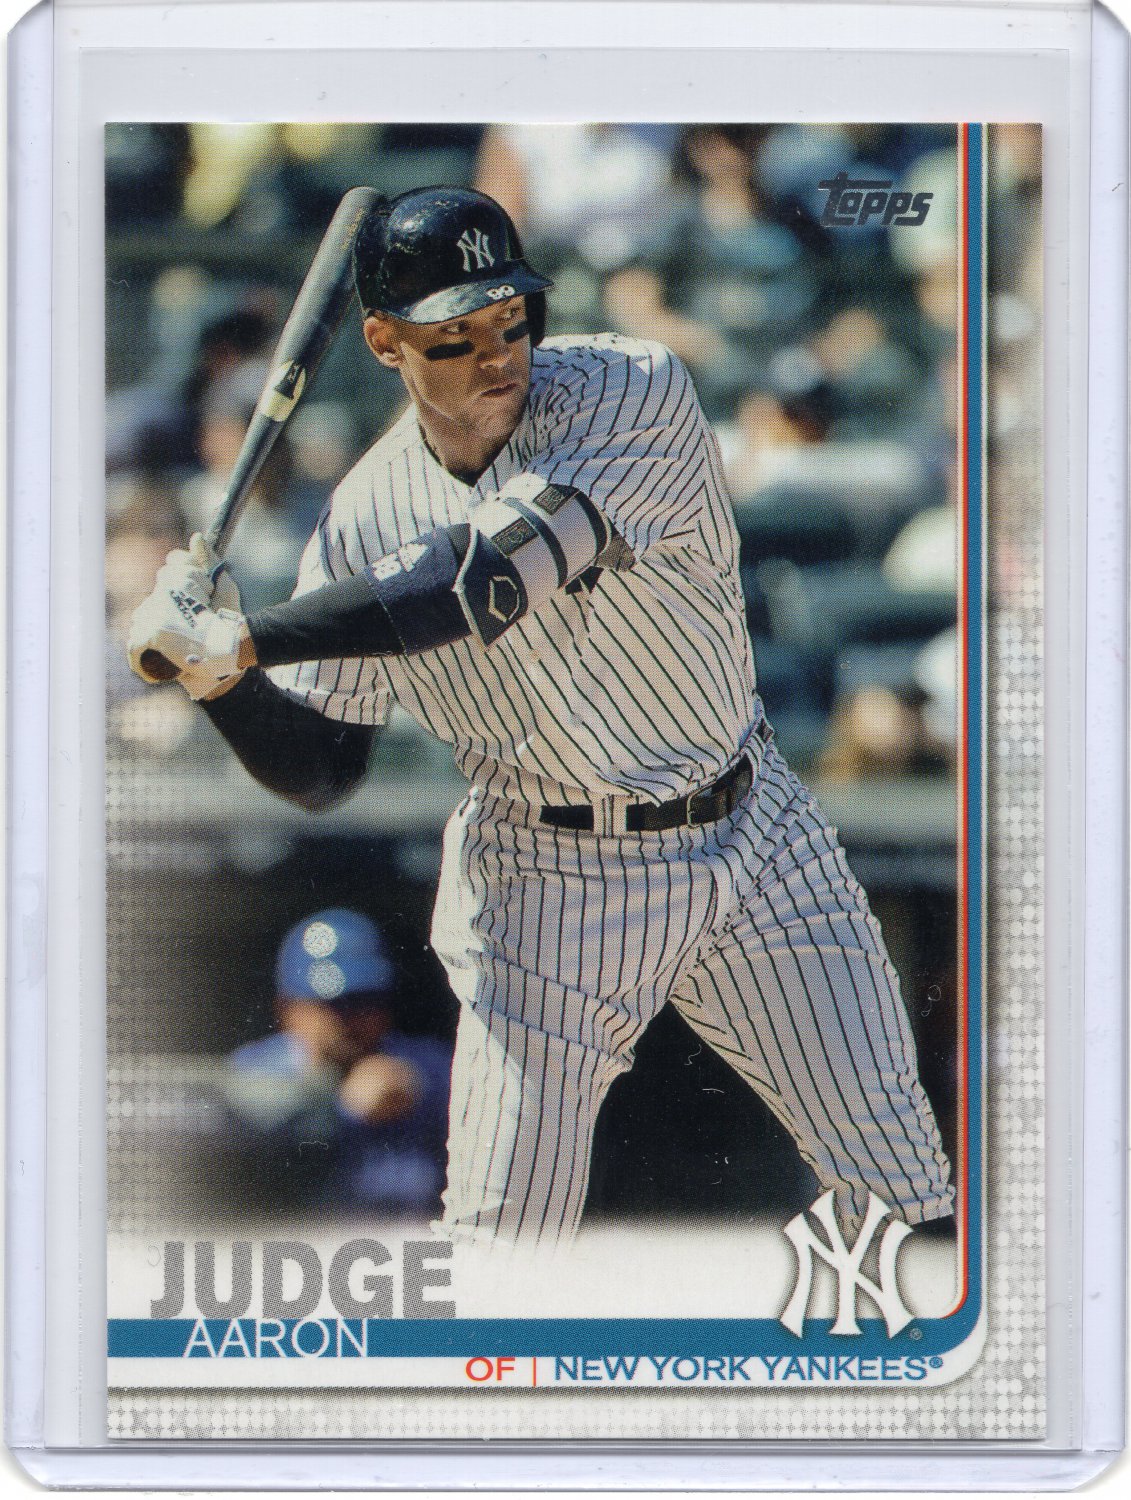 Aaron Judge 2019 Topps Series 1 card 150 New York Yankees